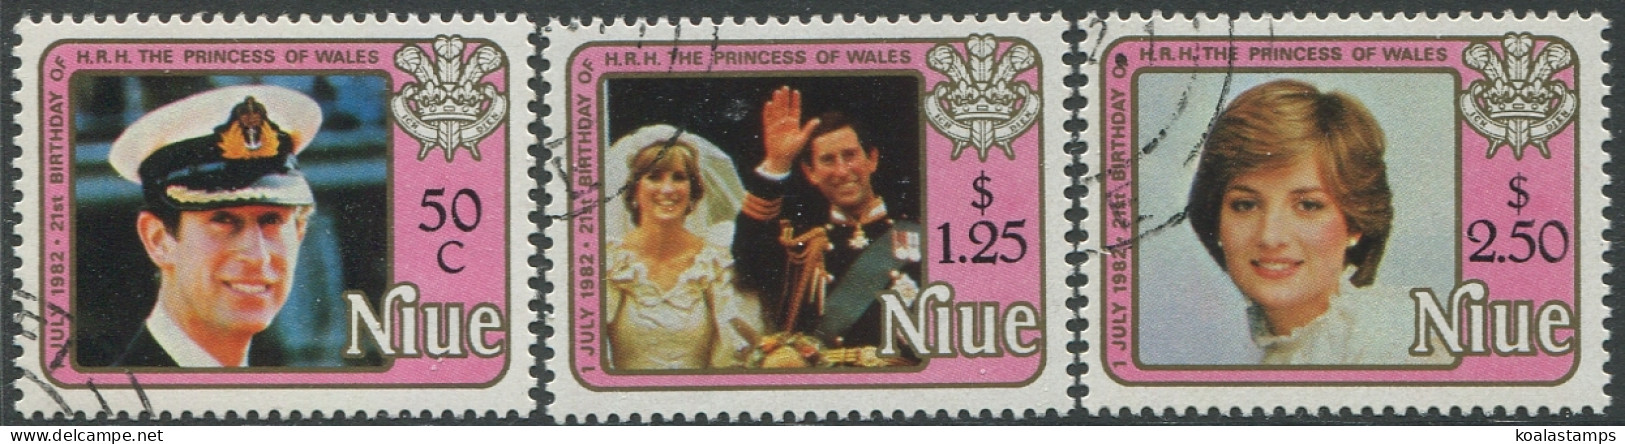 Niue 1982 SG454-456 Princess Of Wales Birthday Set FU - Niue